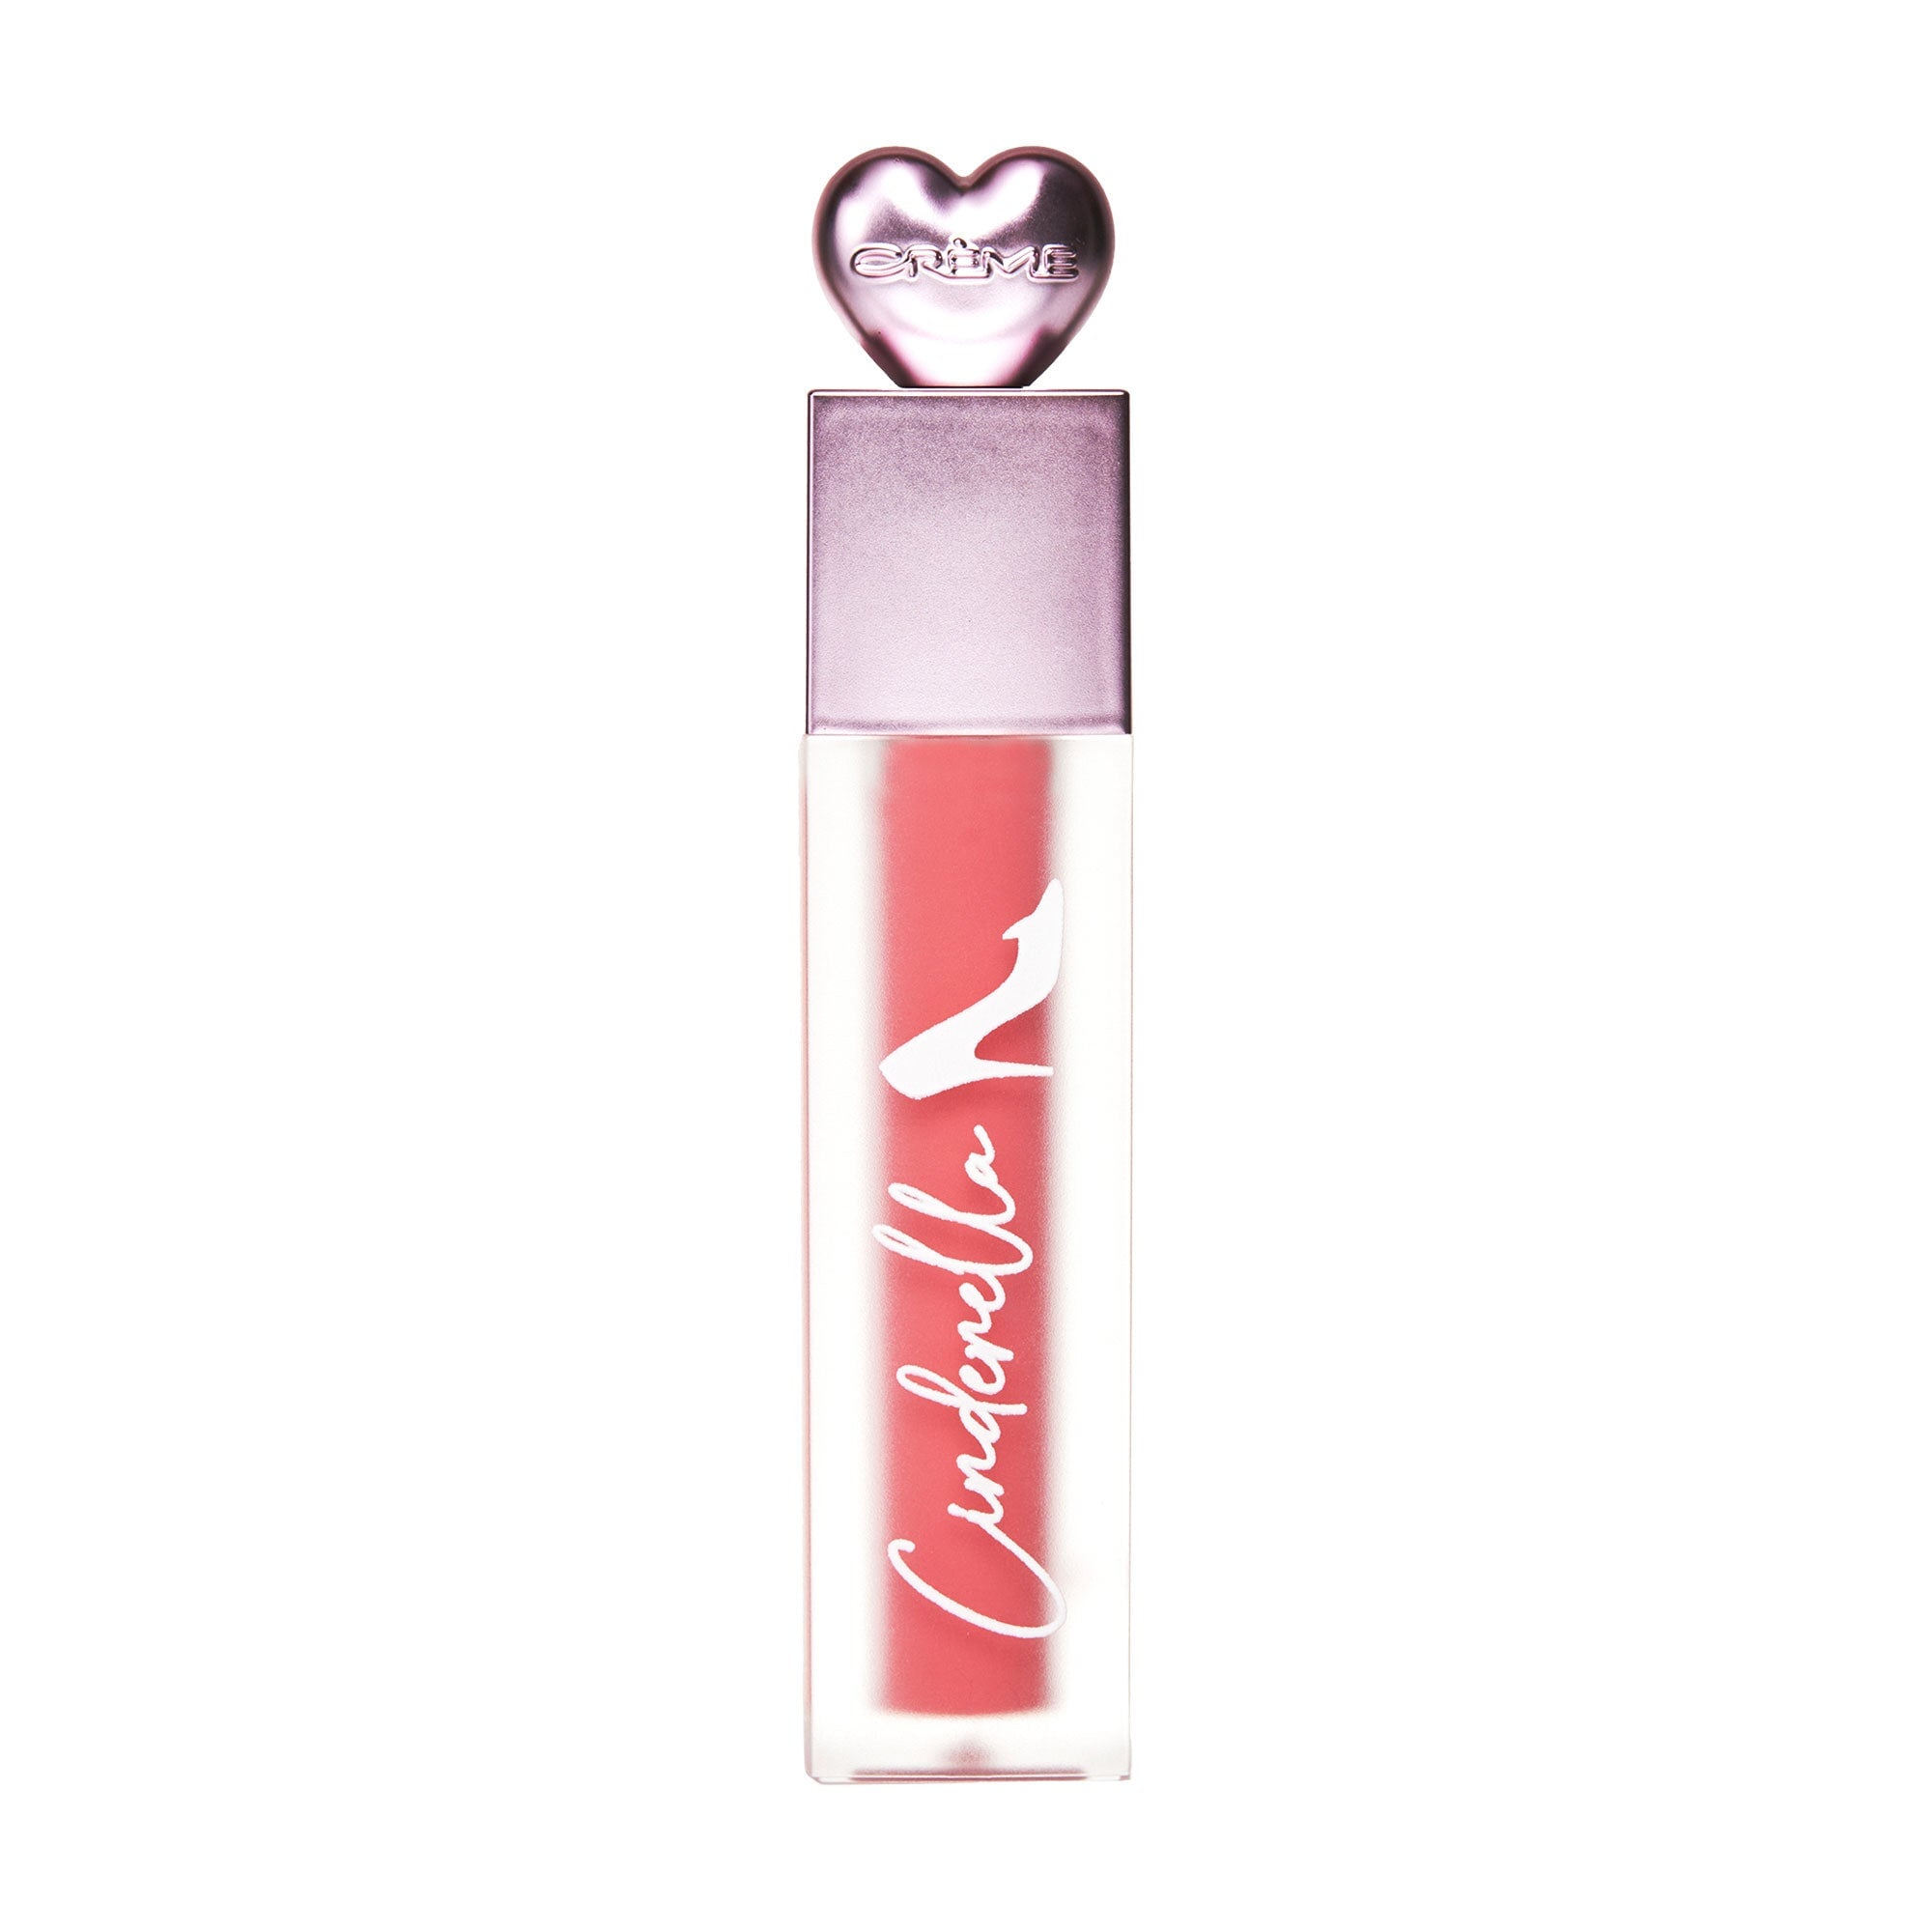 The Crème Shop x Disney Gloss Pop Lipstain Lipstain The Crème Shop x Disney 